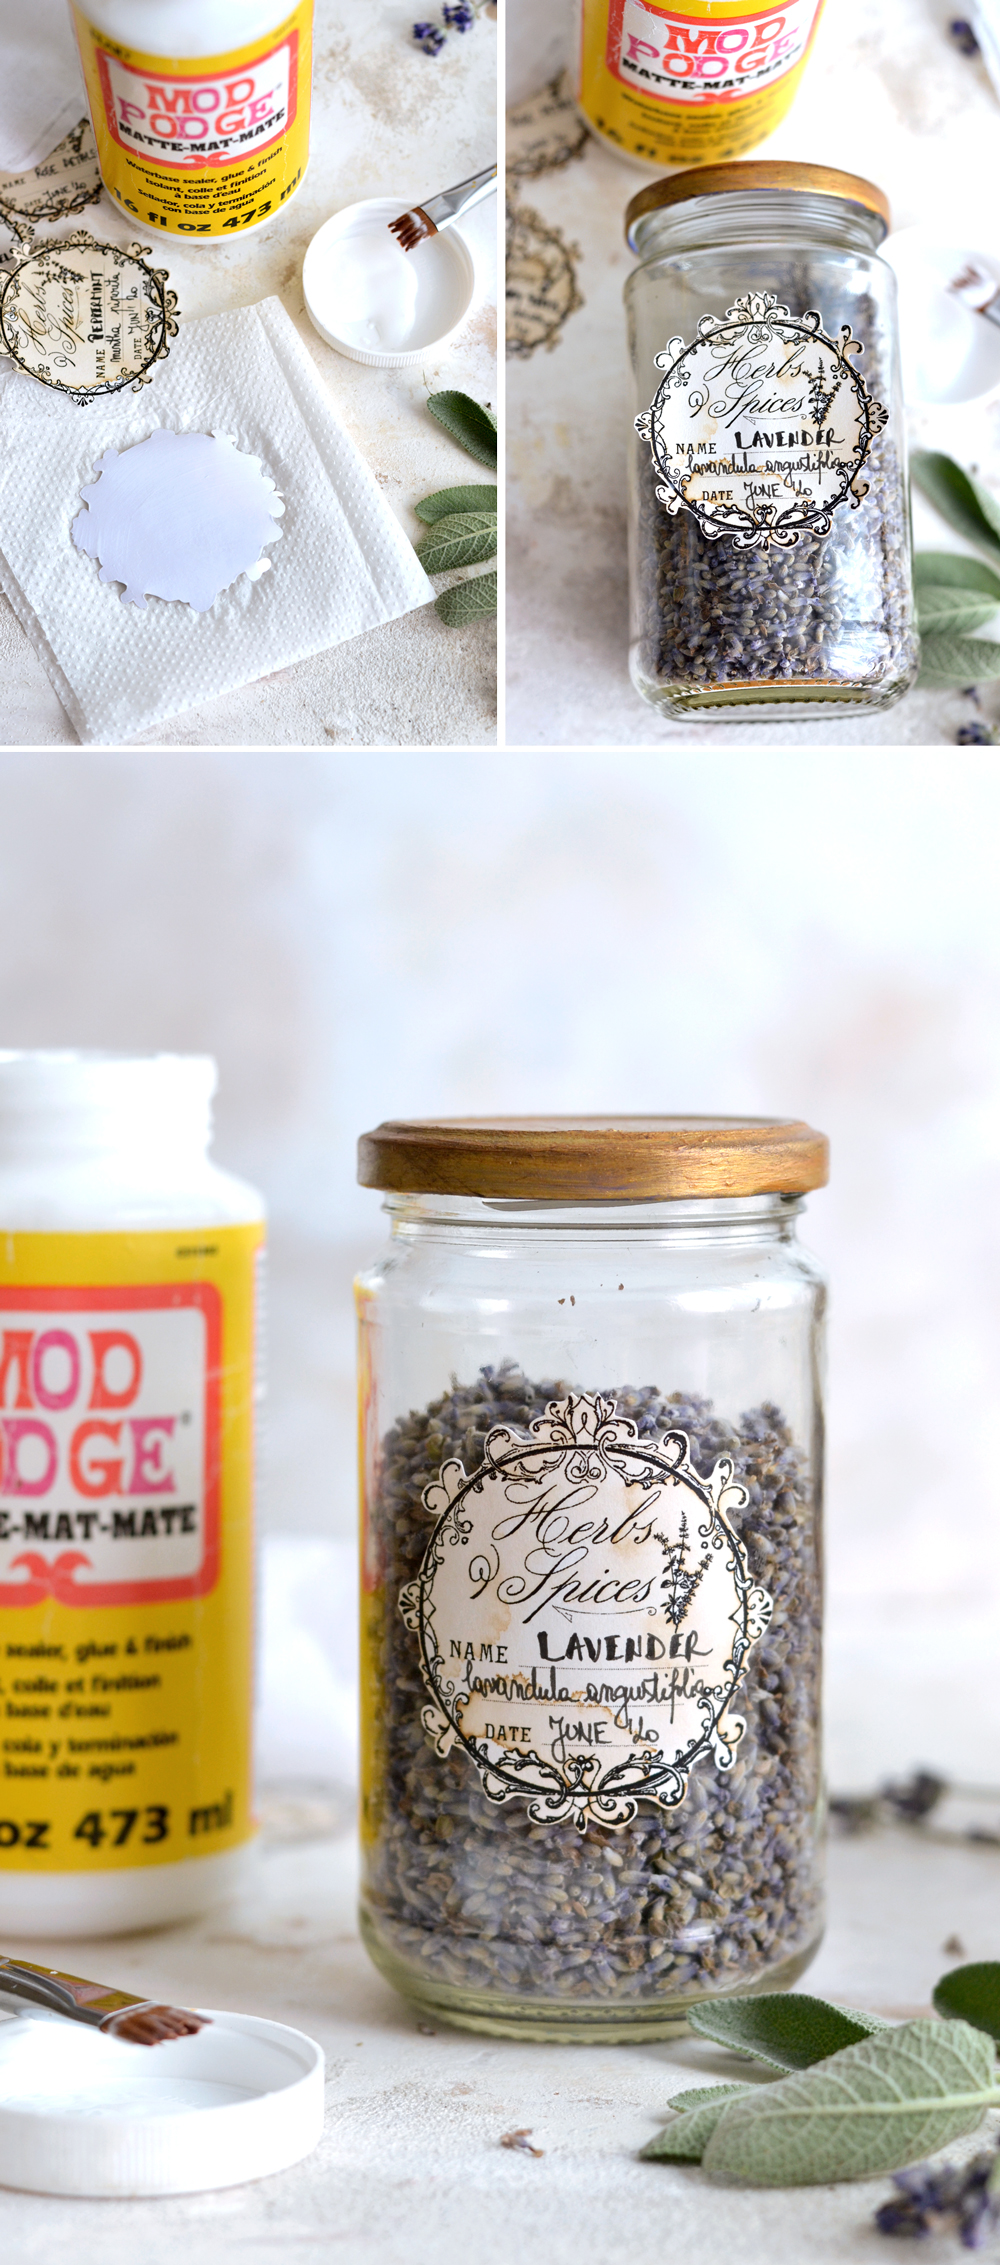 Jar with lavender and mod podge